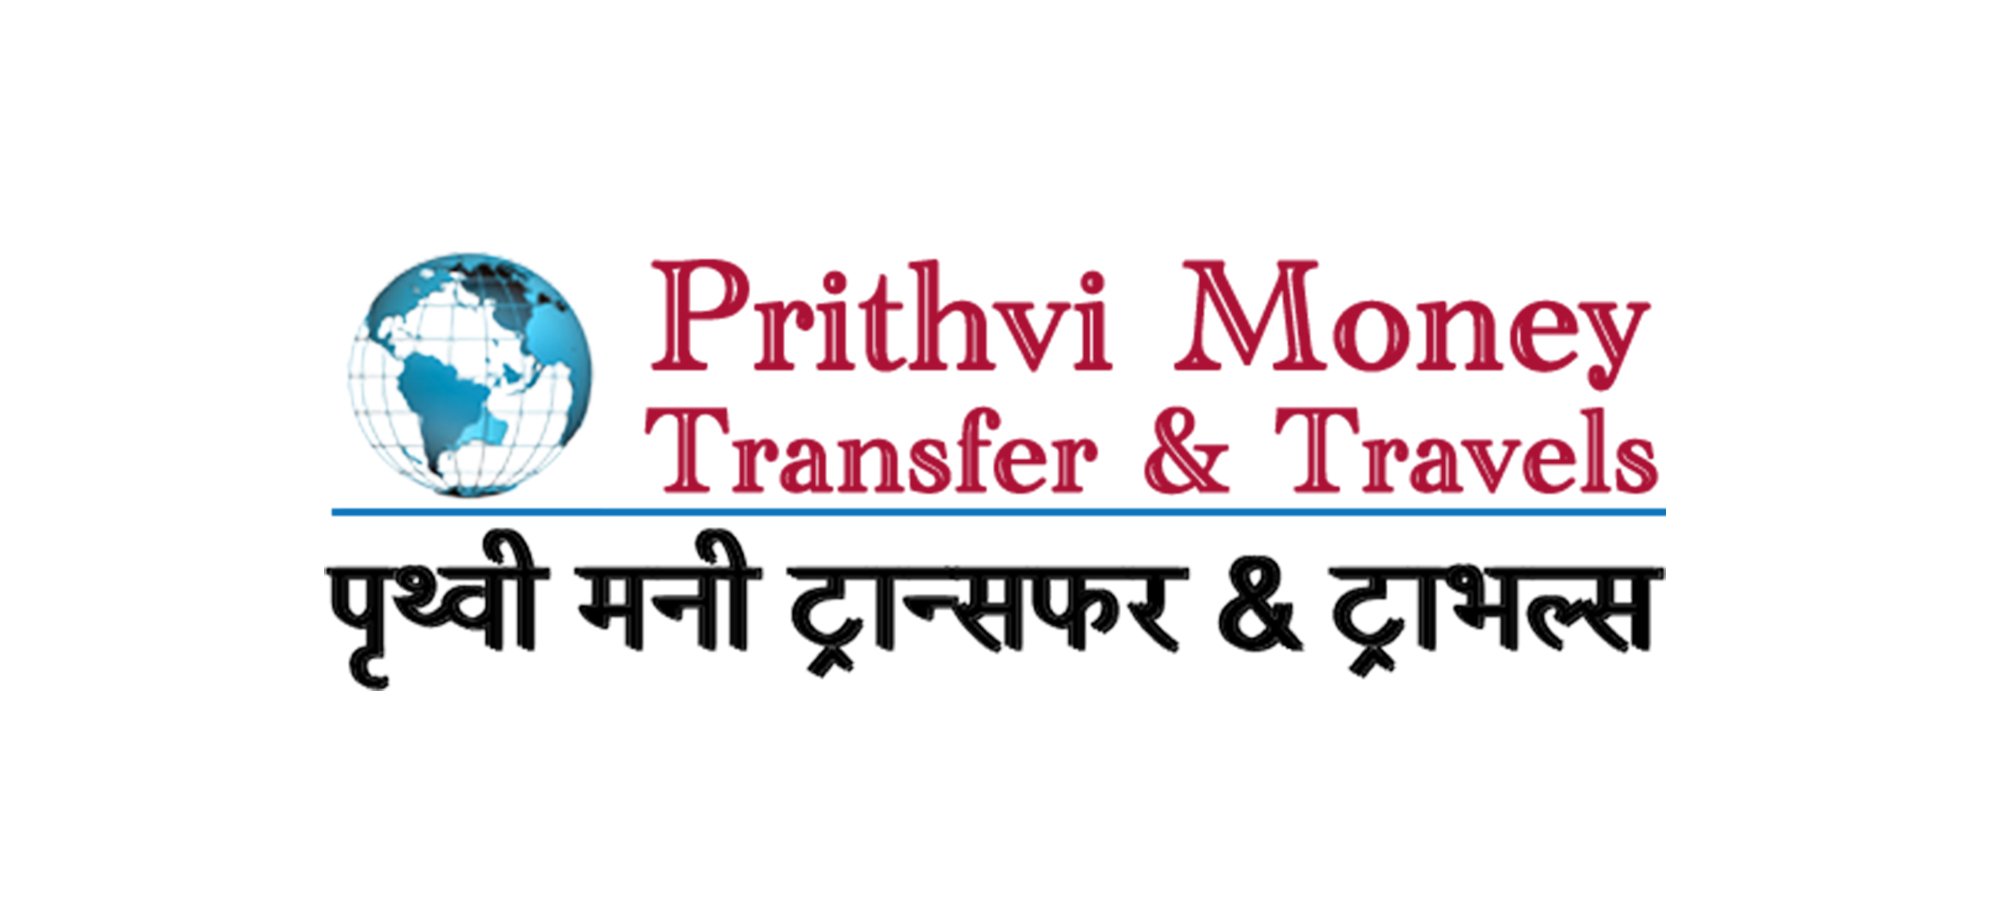 Prithvi Money Transfer & Travels